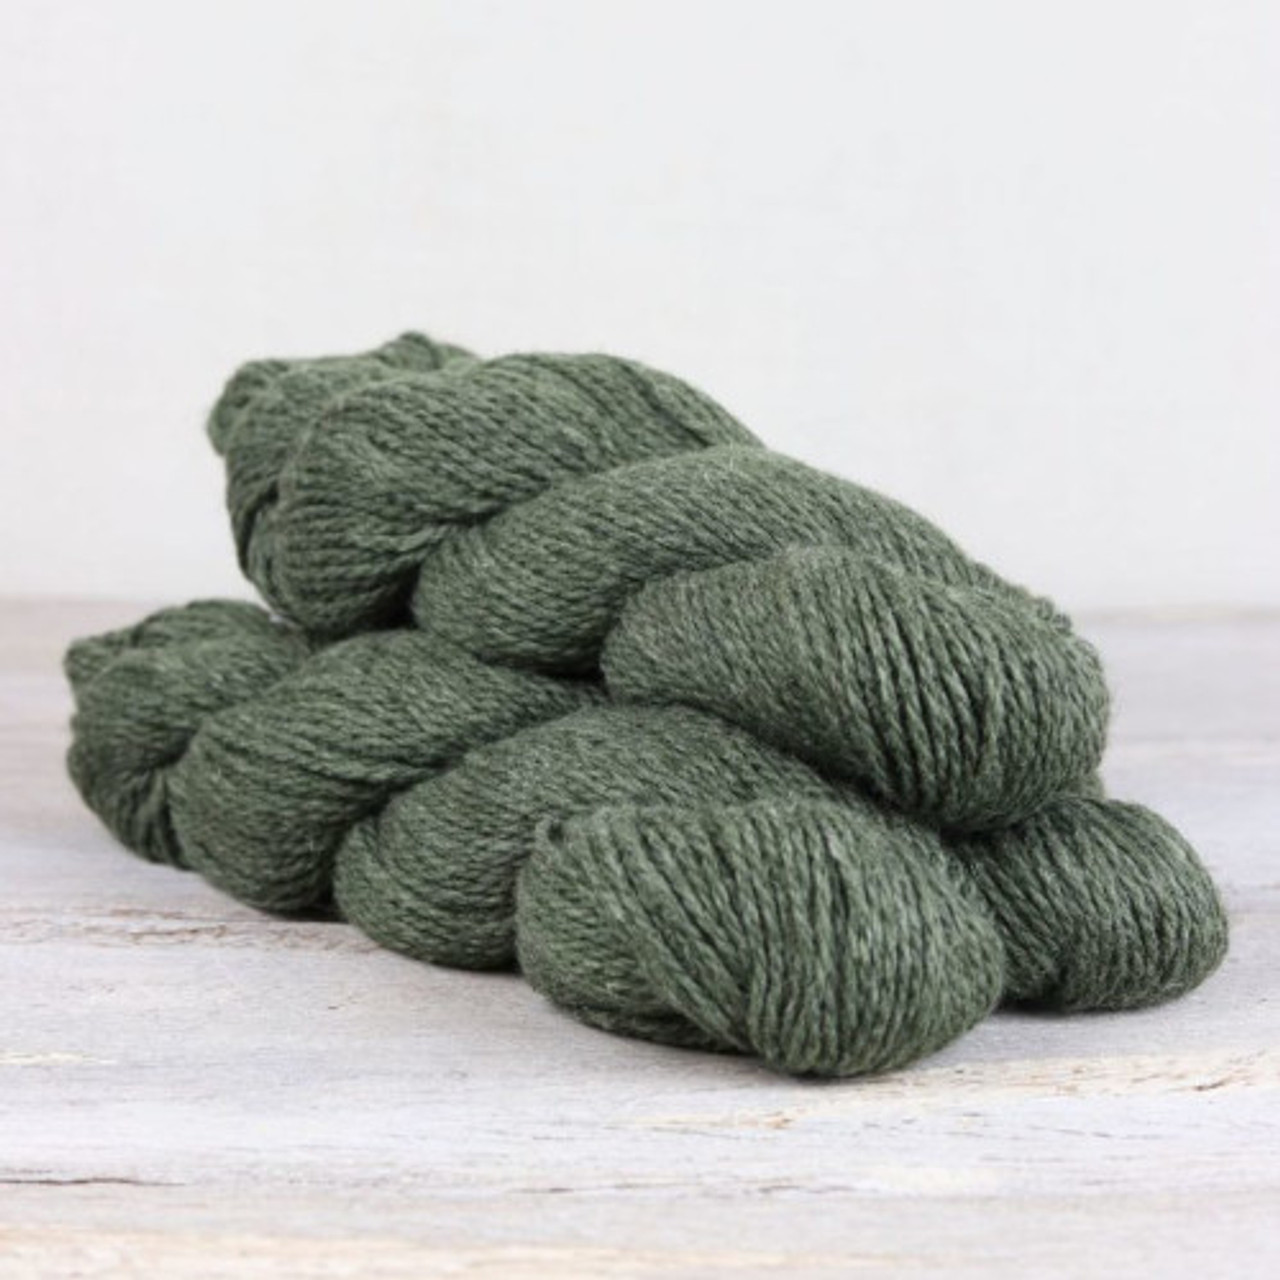 Luma Yarn, Organic Cotton and Linen, silk and Merino Wool